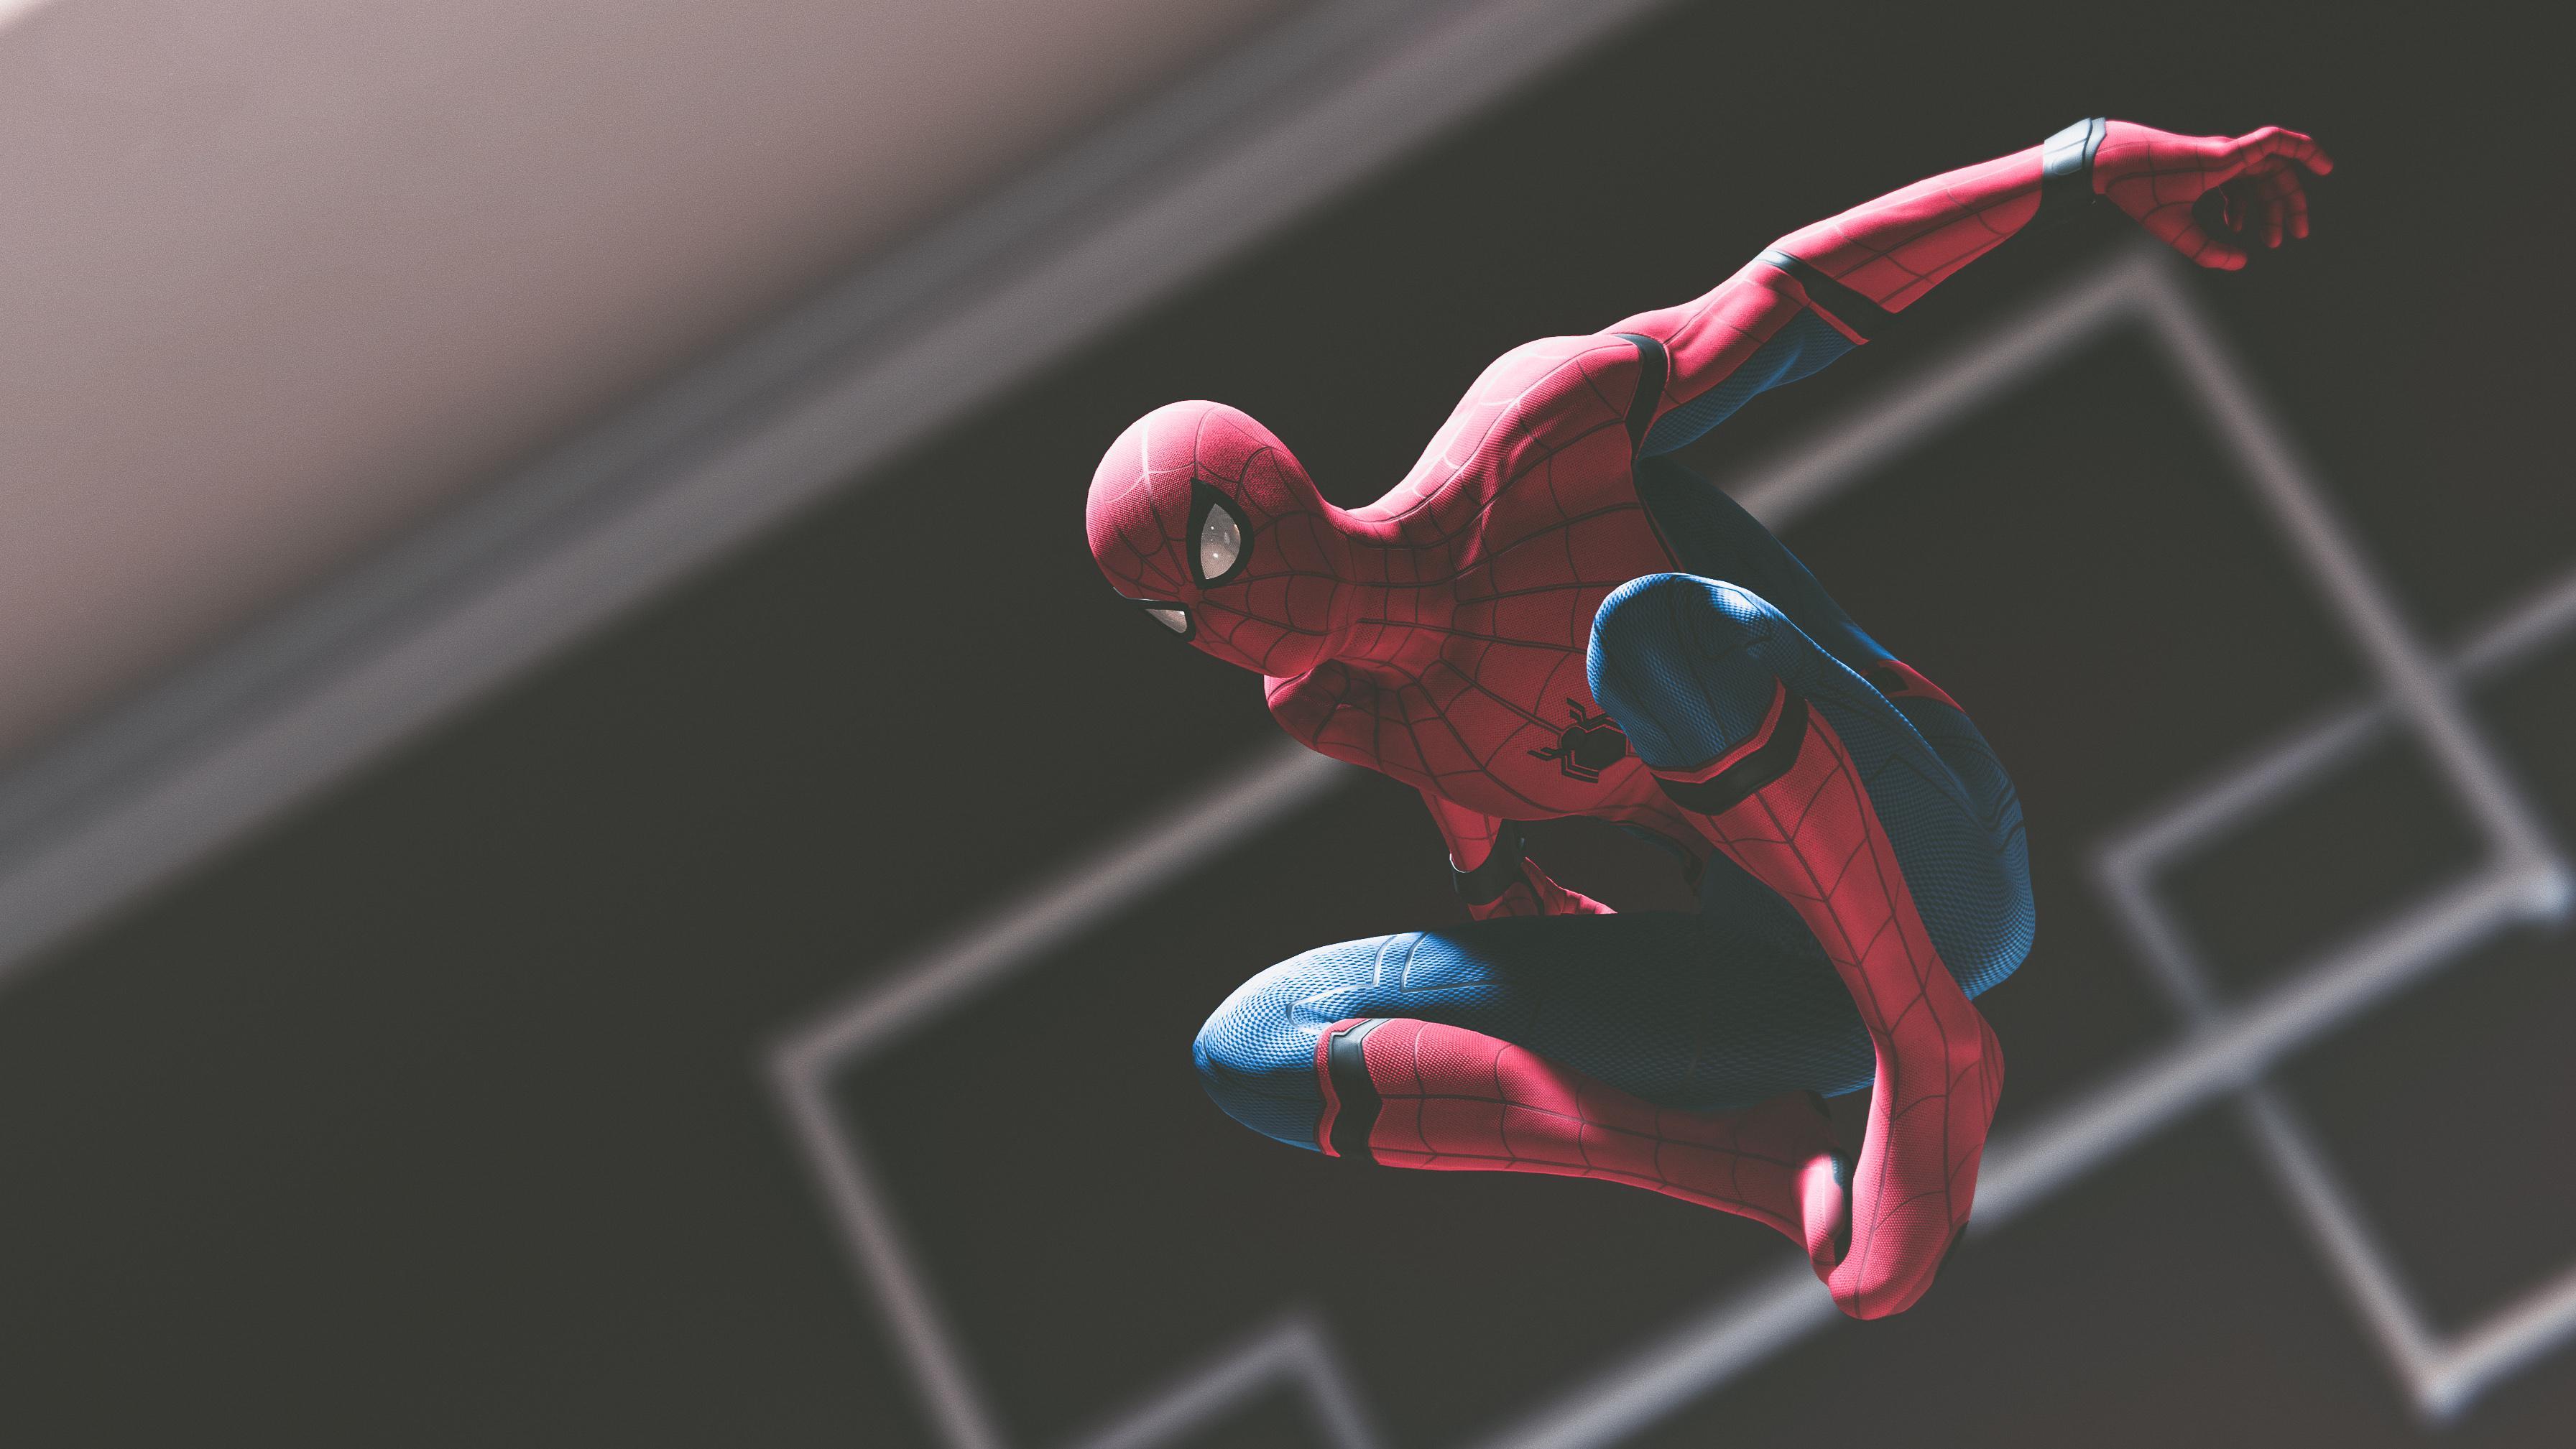 spiderman 4K wallpaper for your desktop or mobile screen